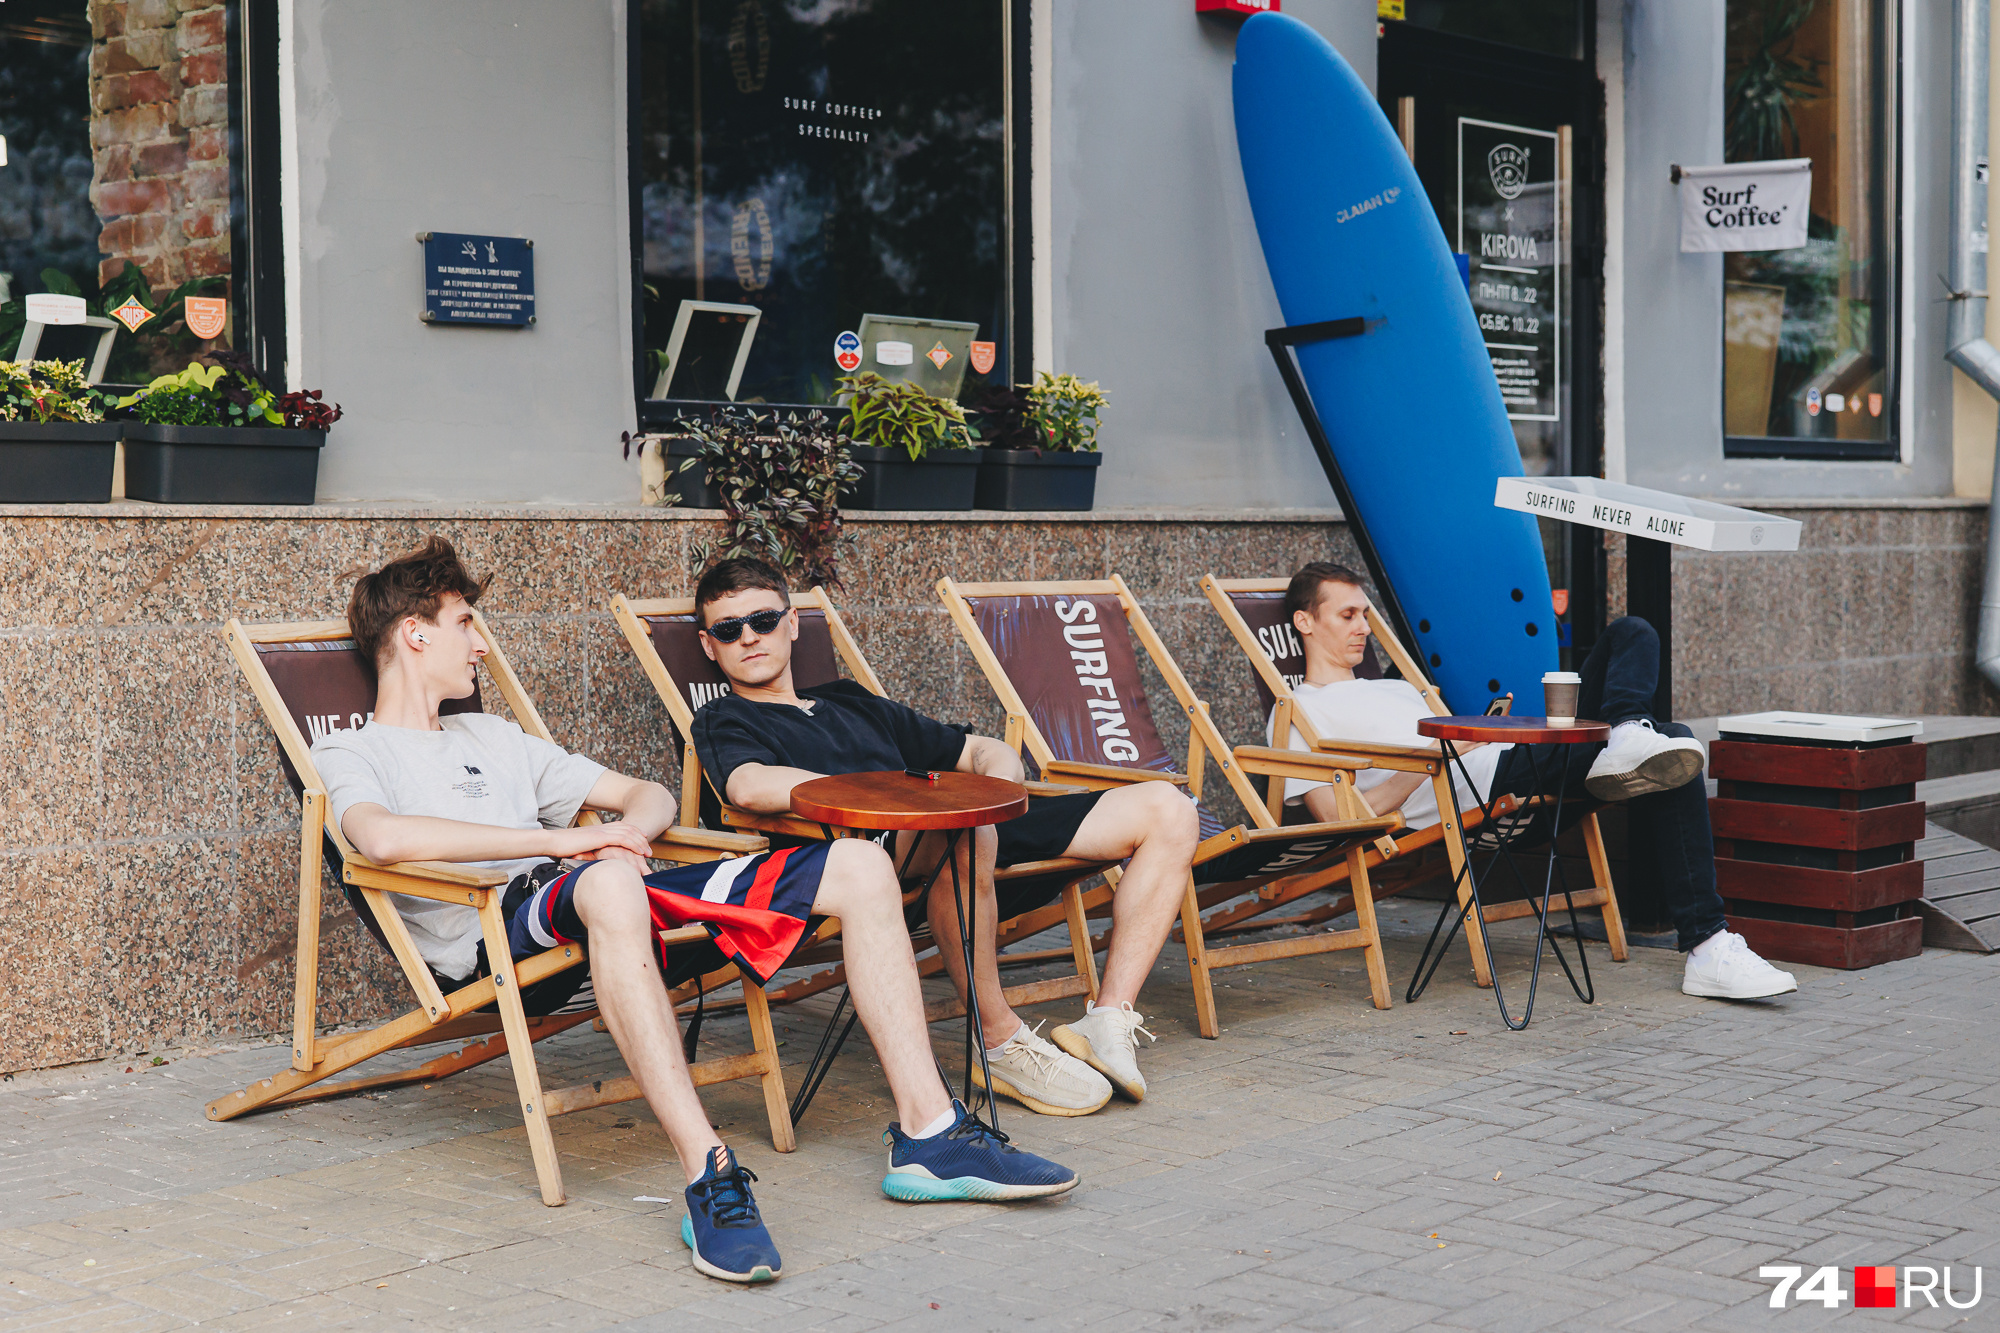 Вот такая обстановка около Surf Coffee на проспекте Ленина